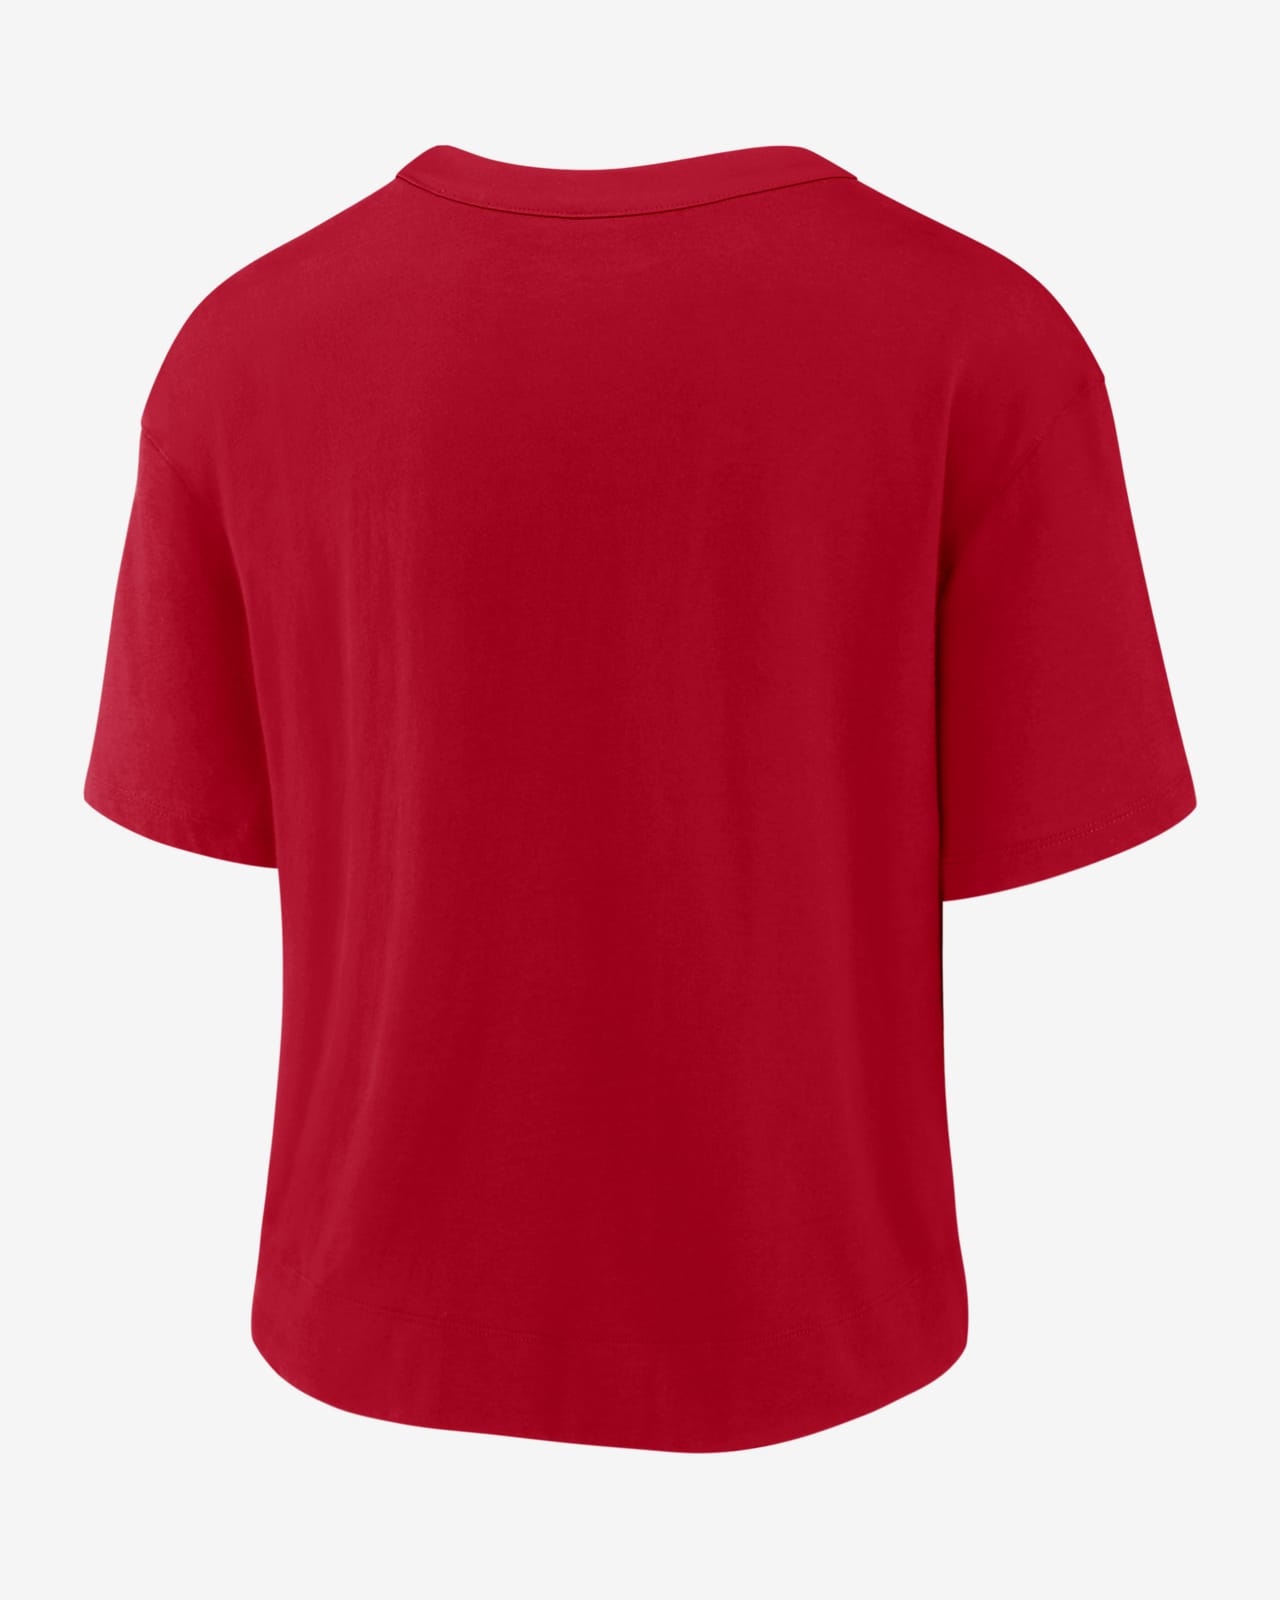 Nike Women's Fashion (NFL Kansas City Chiefs) High-Hip T-Shirt in Red, Size: Xs | NKZZ080K7G-06V